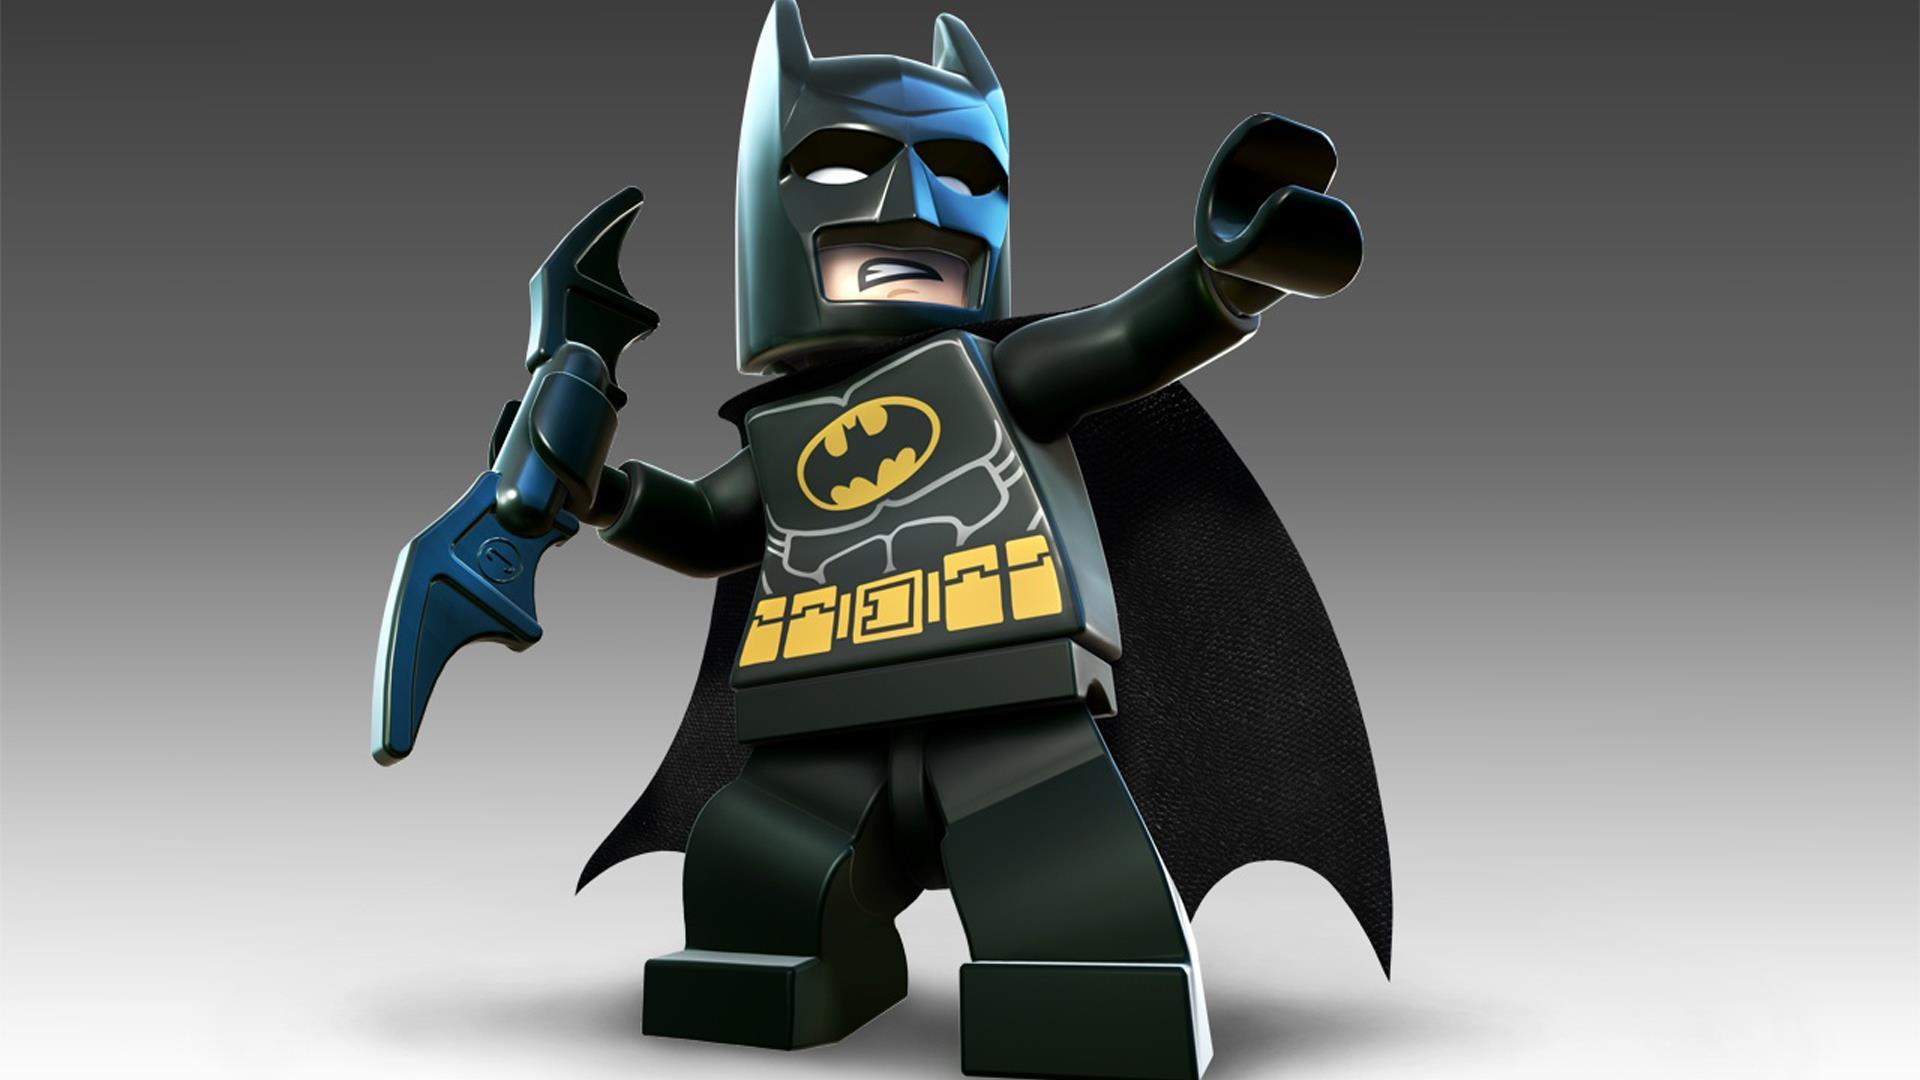 1920 x 1080 · jpeg - Batman Lego, HD Cartoons, 4k Wallpapers, Images, Backgrounds, Photos ...